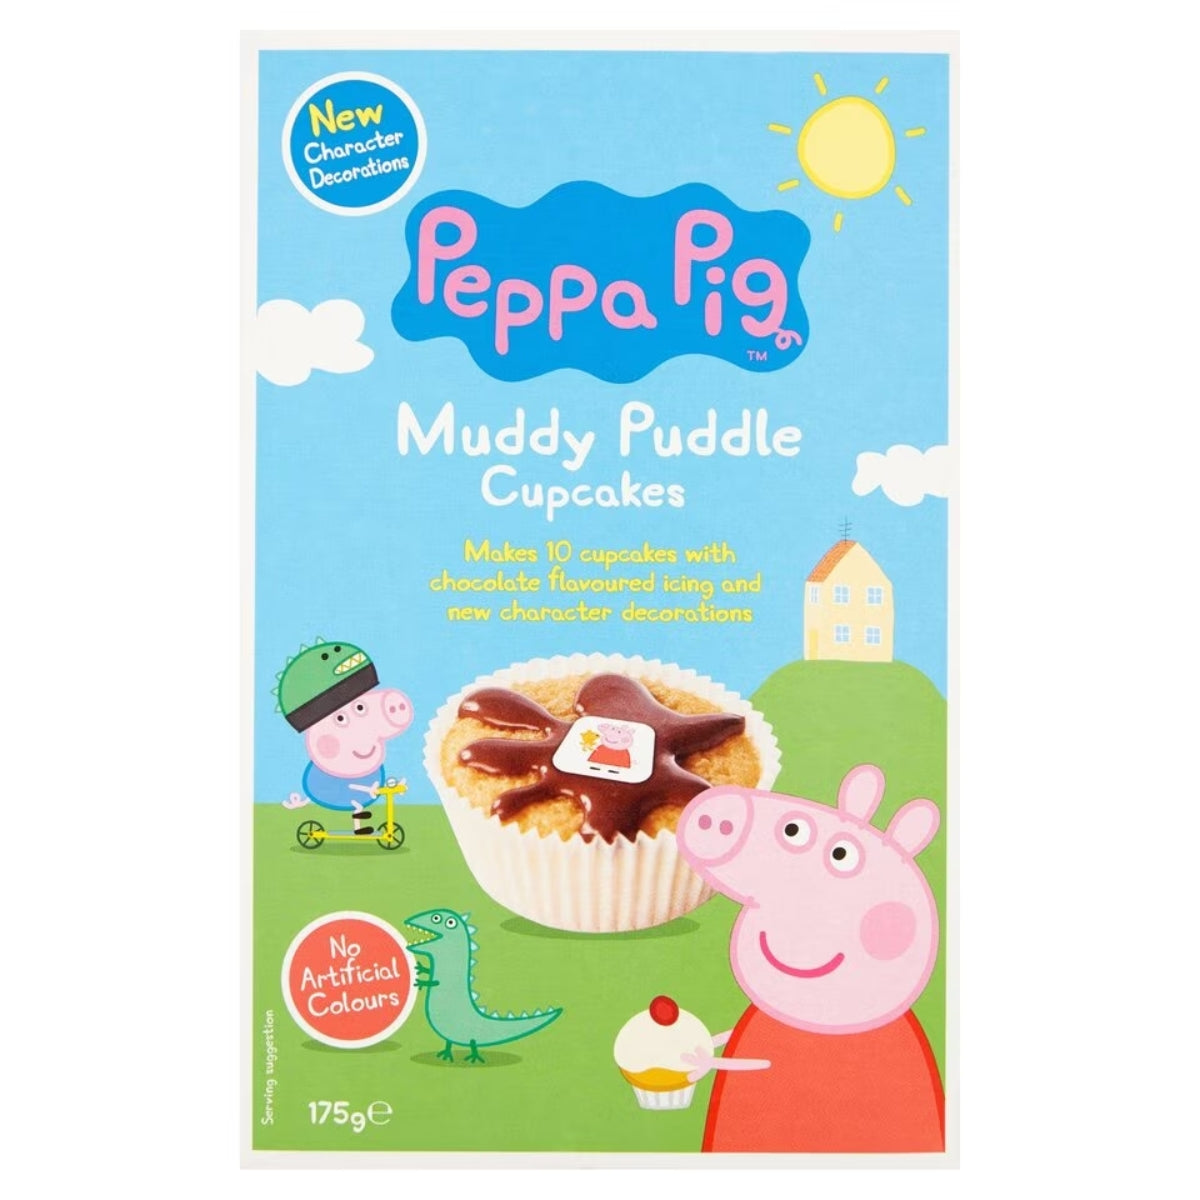 Peppa Pig - Muddy Puddle Cupcakes Mix - 175g.